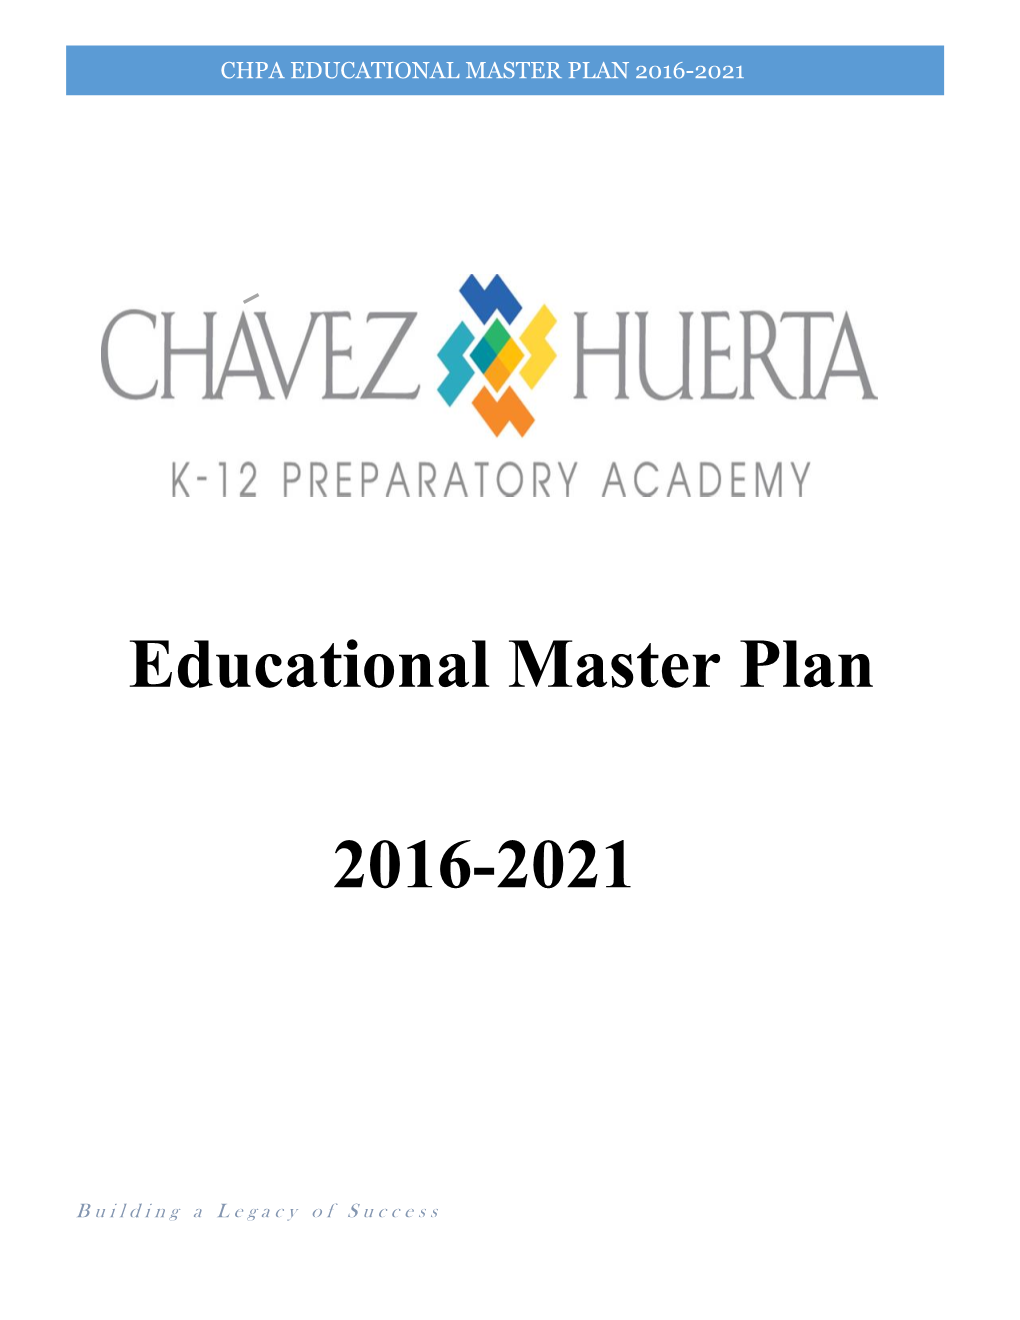 Chpa Educational Master Plan 2016-2021